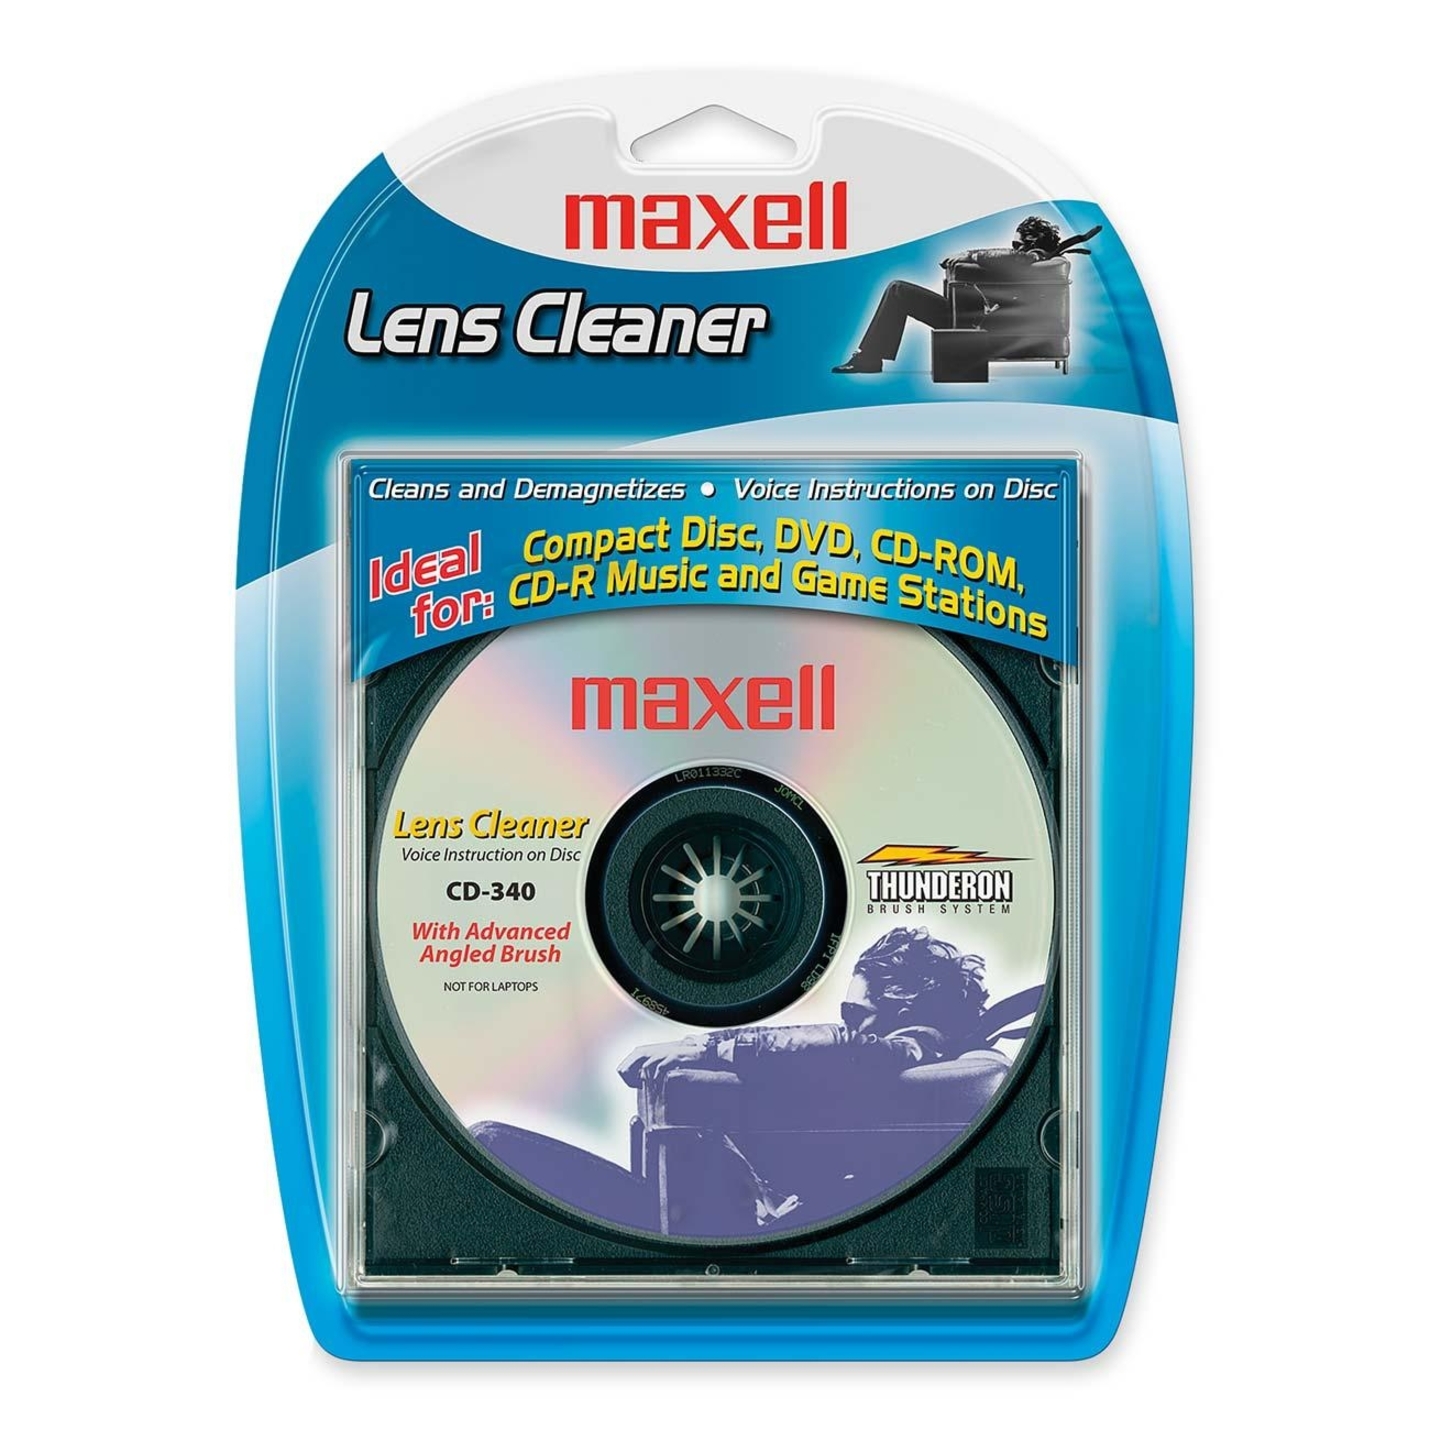 Maxell CD-340 CD Lens Cleaner - image 1 of 2